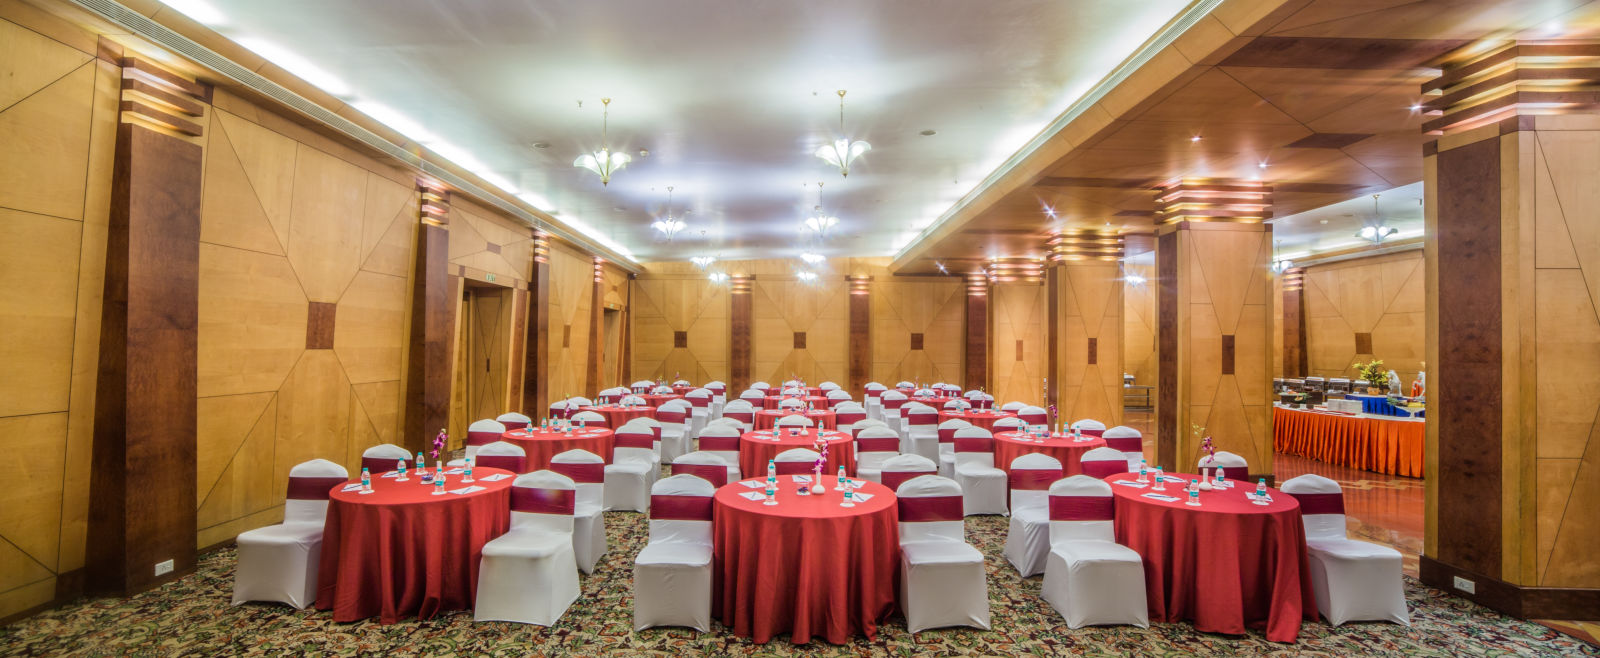 Seating arrangement in Mayfair Hall at Sitara Luxury Hotel